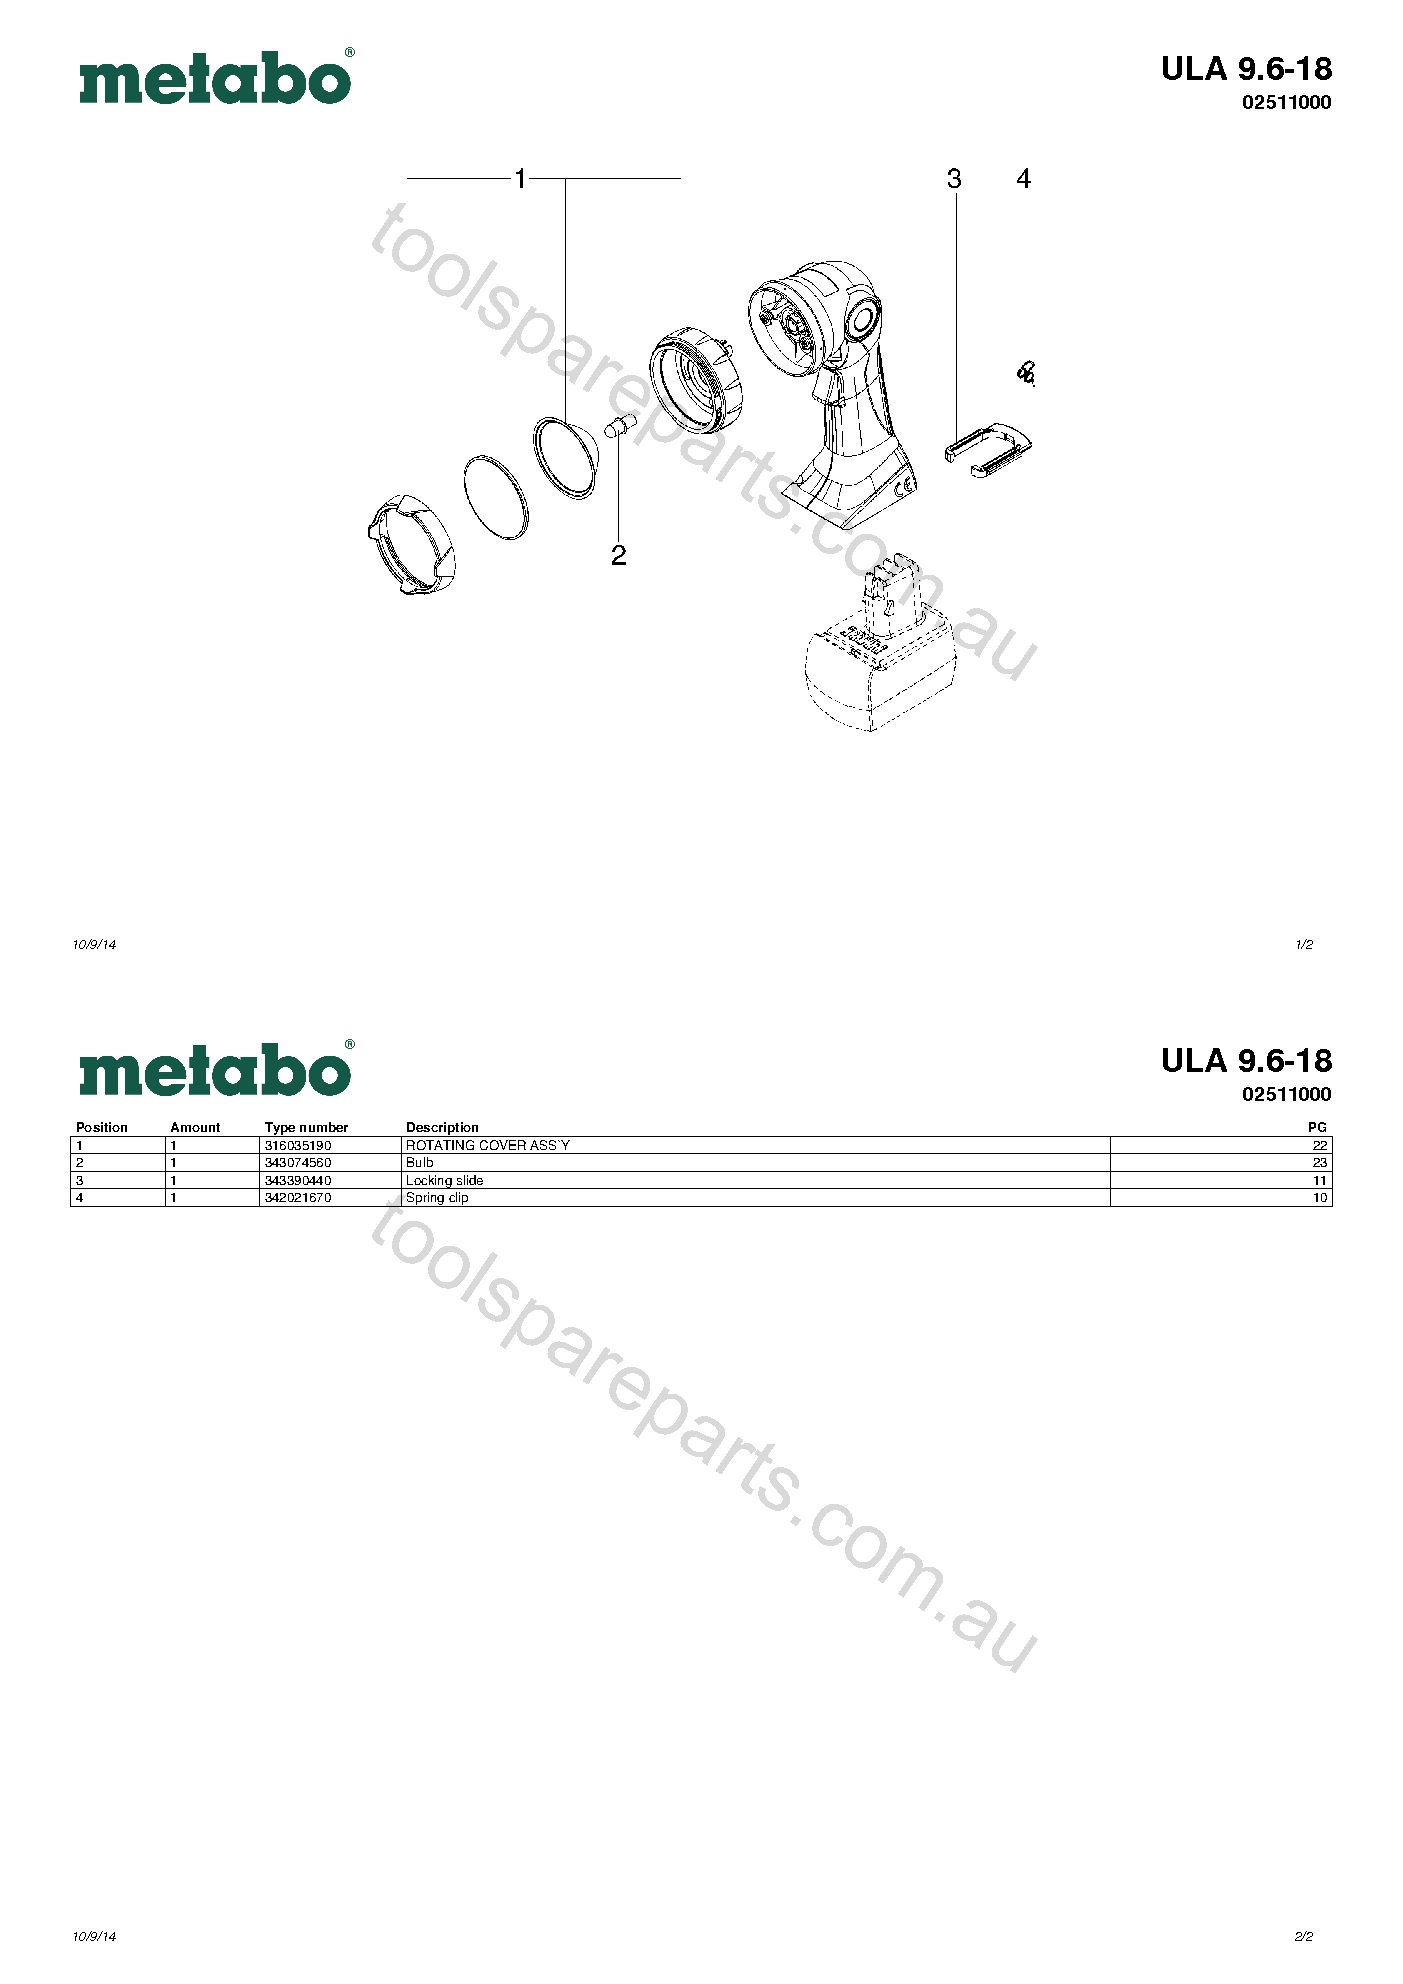 Metabo ULA 9.6-18 02511000  Diagram 1